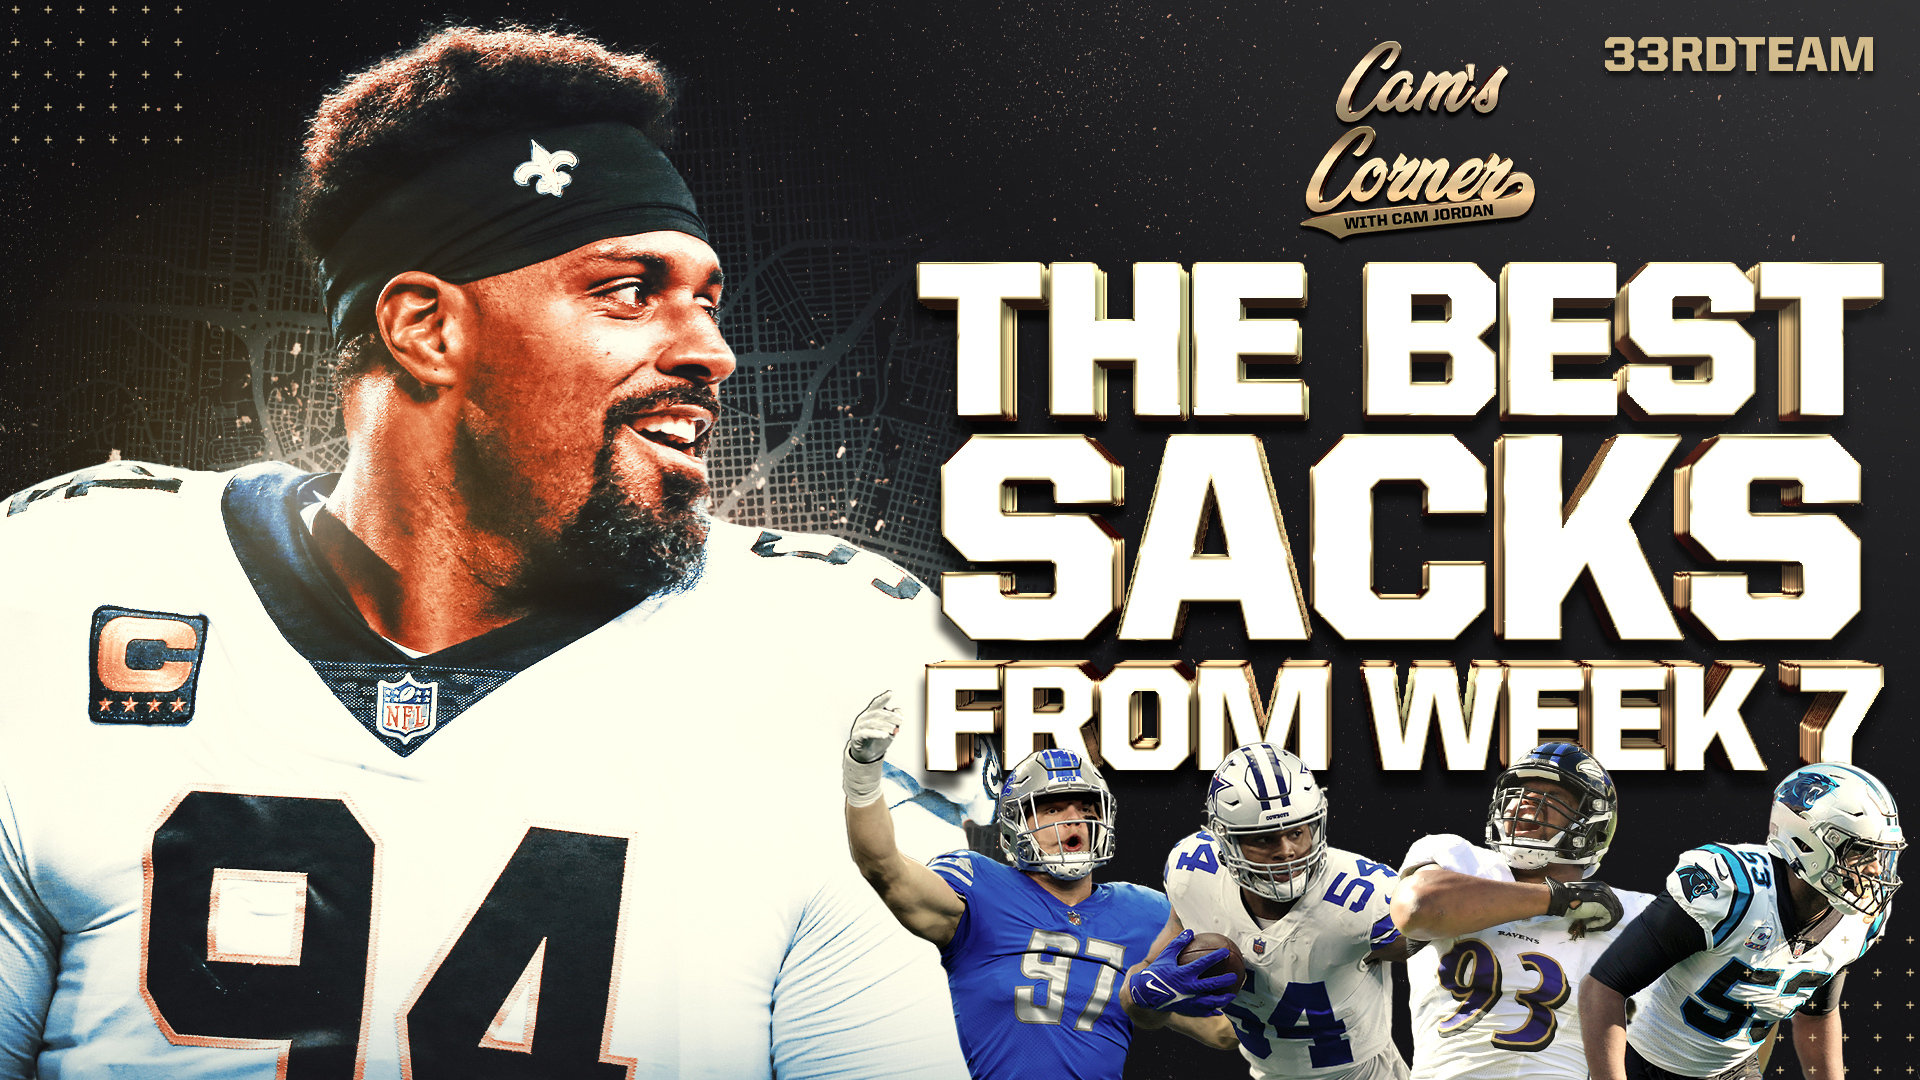 Cam's Corner: NFL's Best Sacks From Week 7